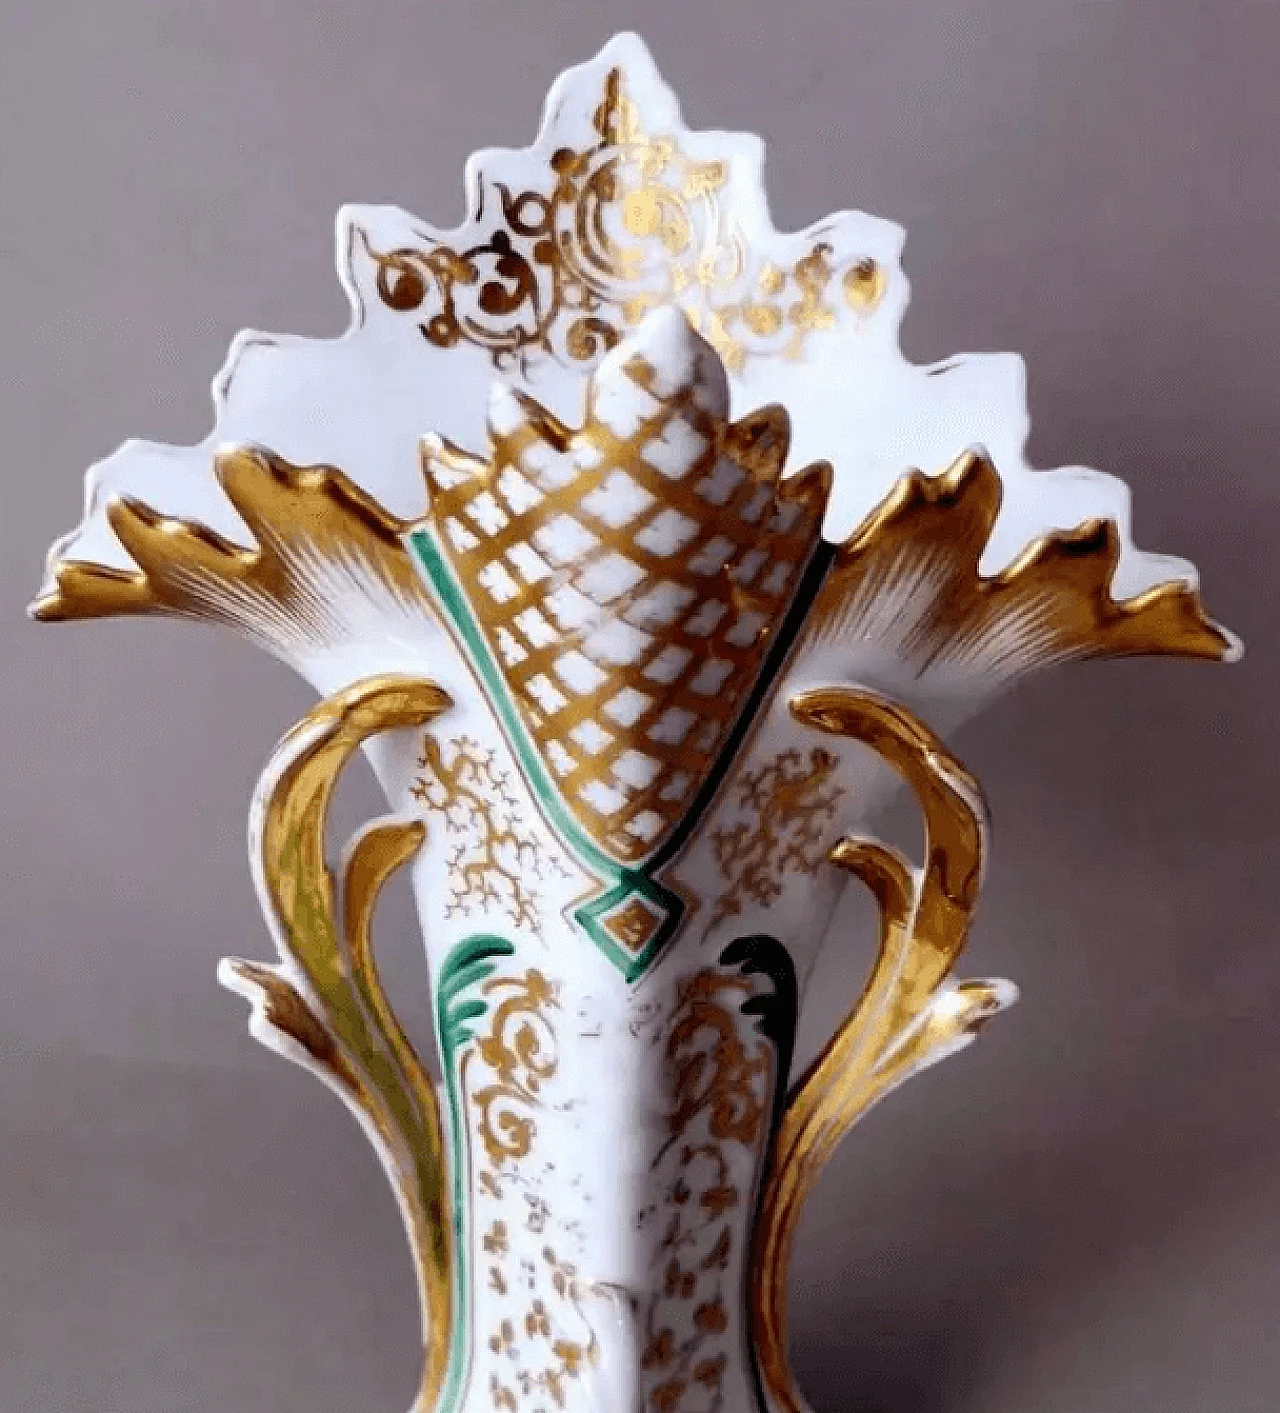 French wedding vase in De Paris porcelain, late 19th century 3